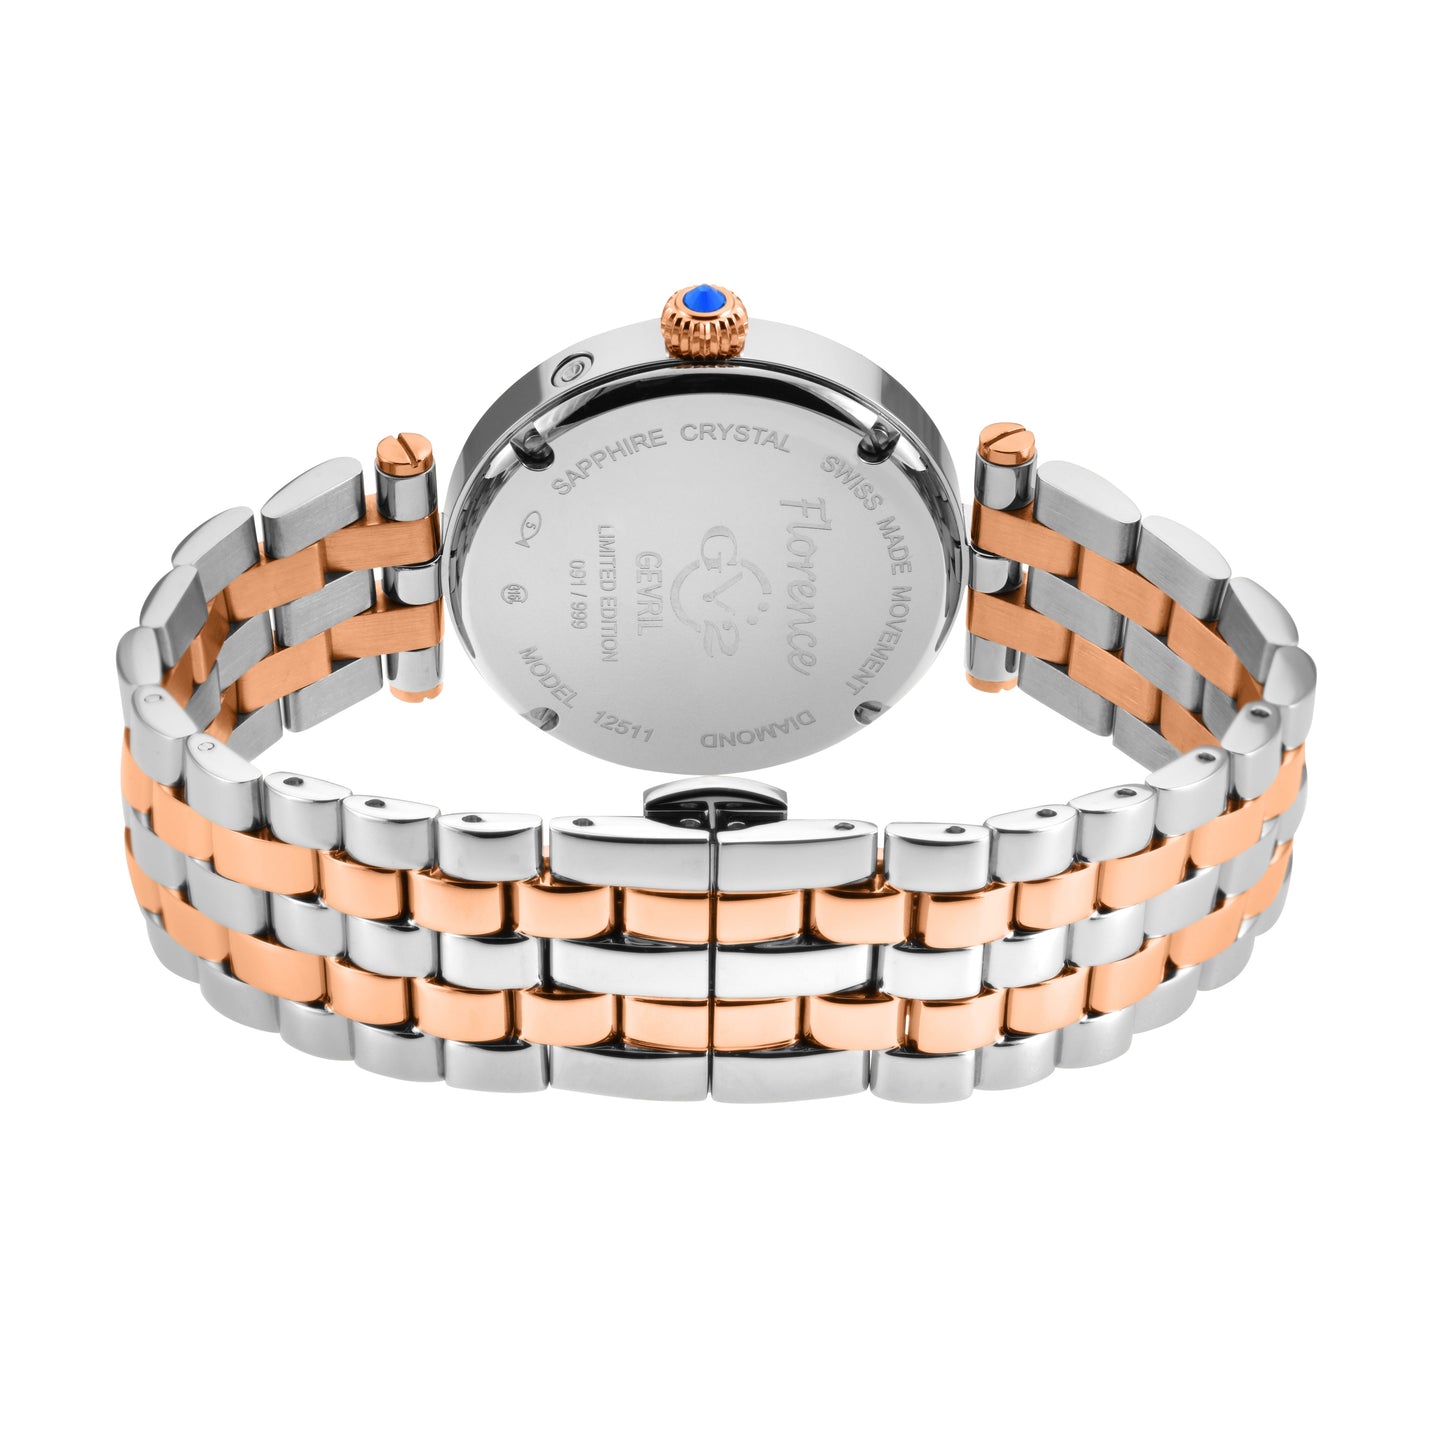 Gevril-Luxury-Swiss-Watches-GV2 Florence Diamond-12511